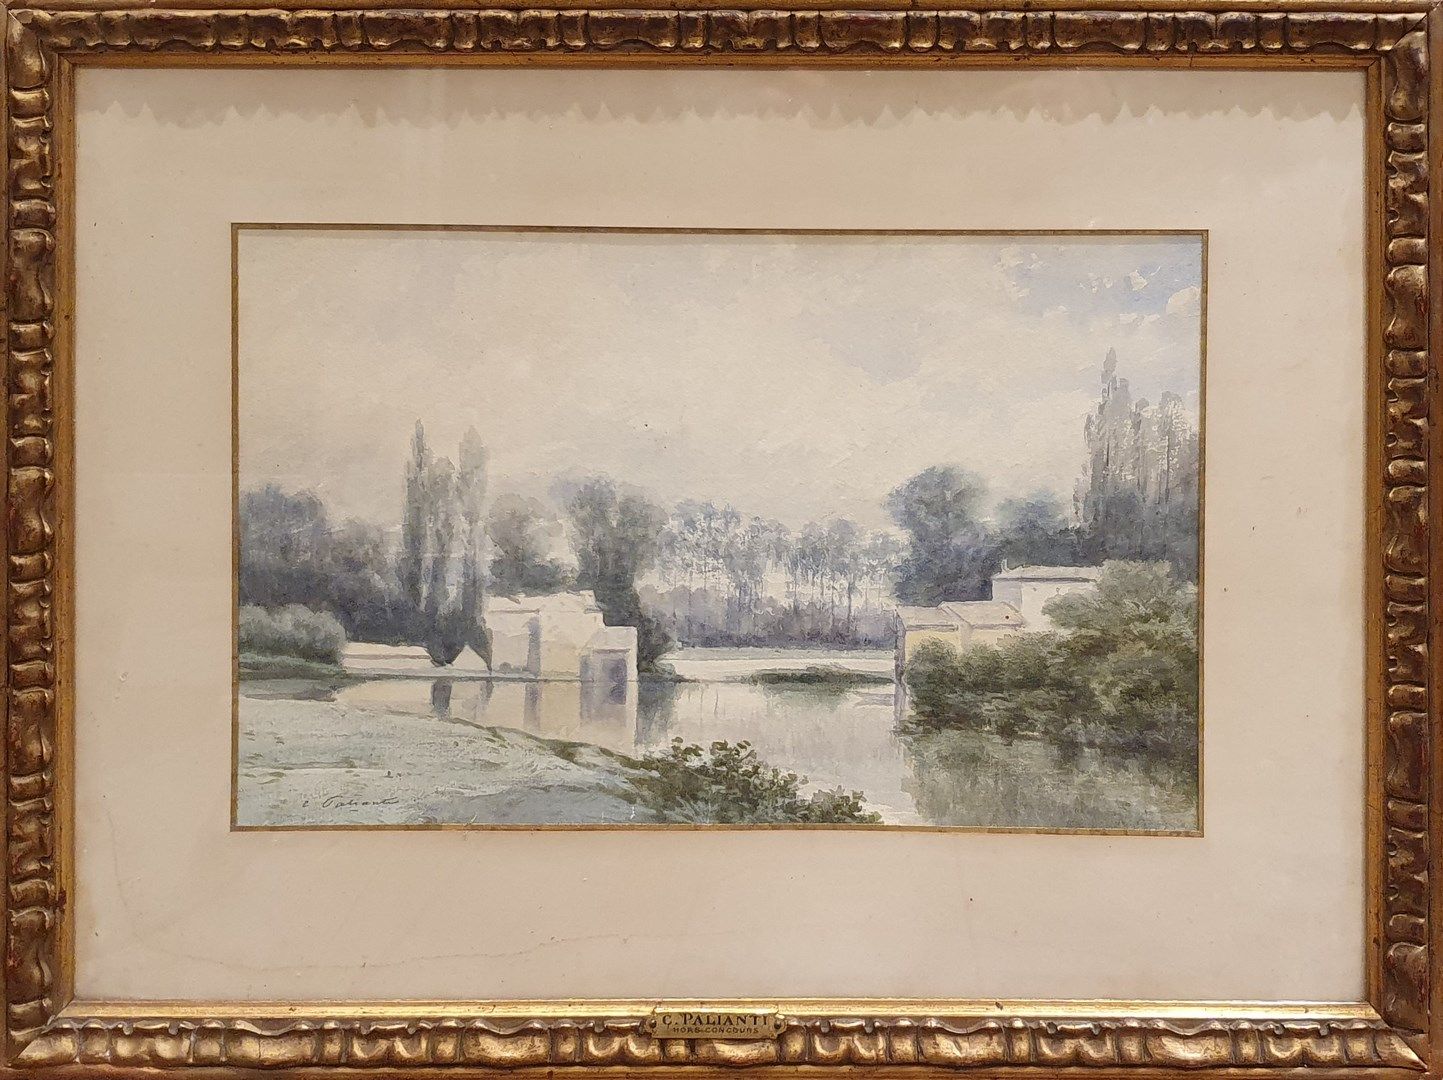 Null 帕兰蒂-查尔斯-玛丽 (1815-?)

一个池塘的边缘

纸上水彩画，左下角有签名

刮痕、污渍和狐臭。

25.5x41厘米